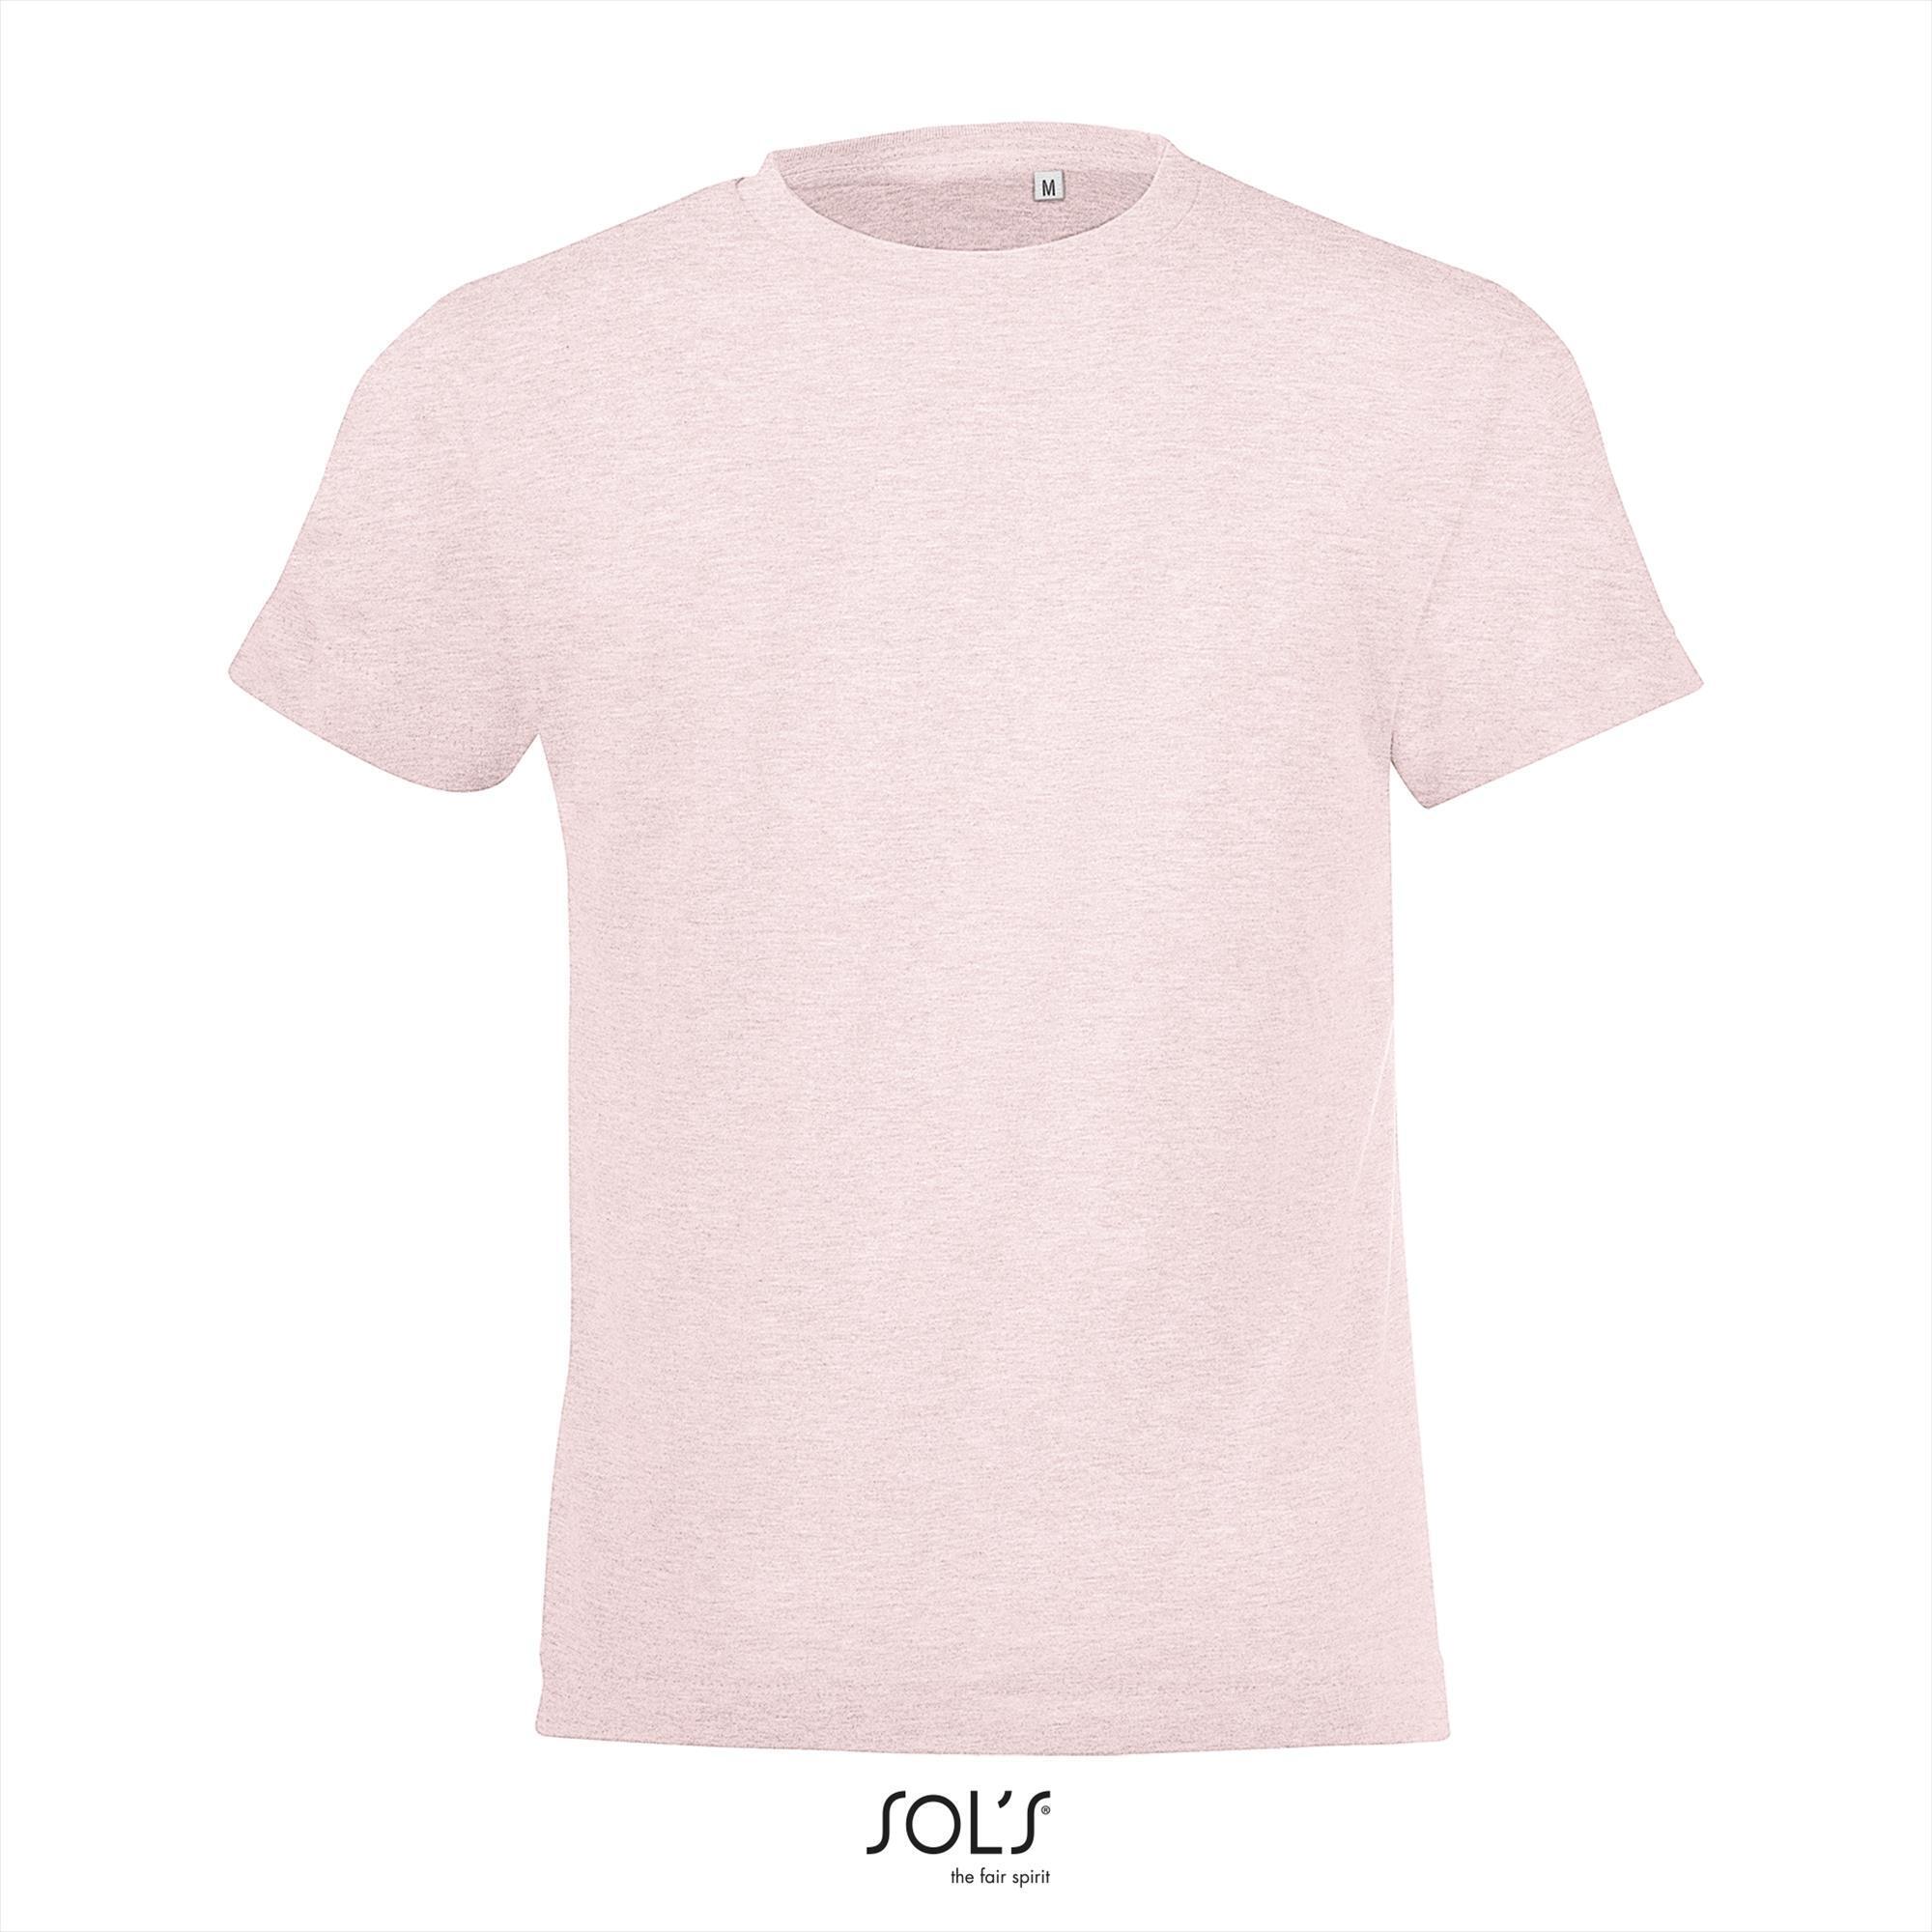 Kinder shirt heather roze Sol's 150 Regent fit